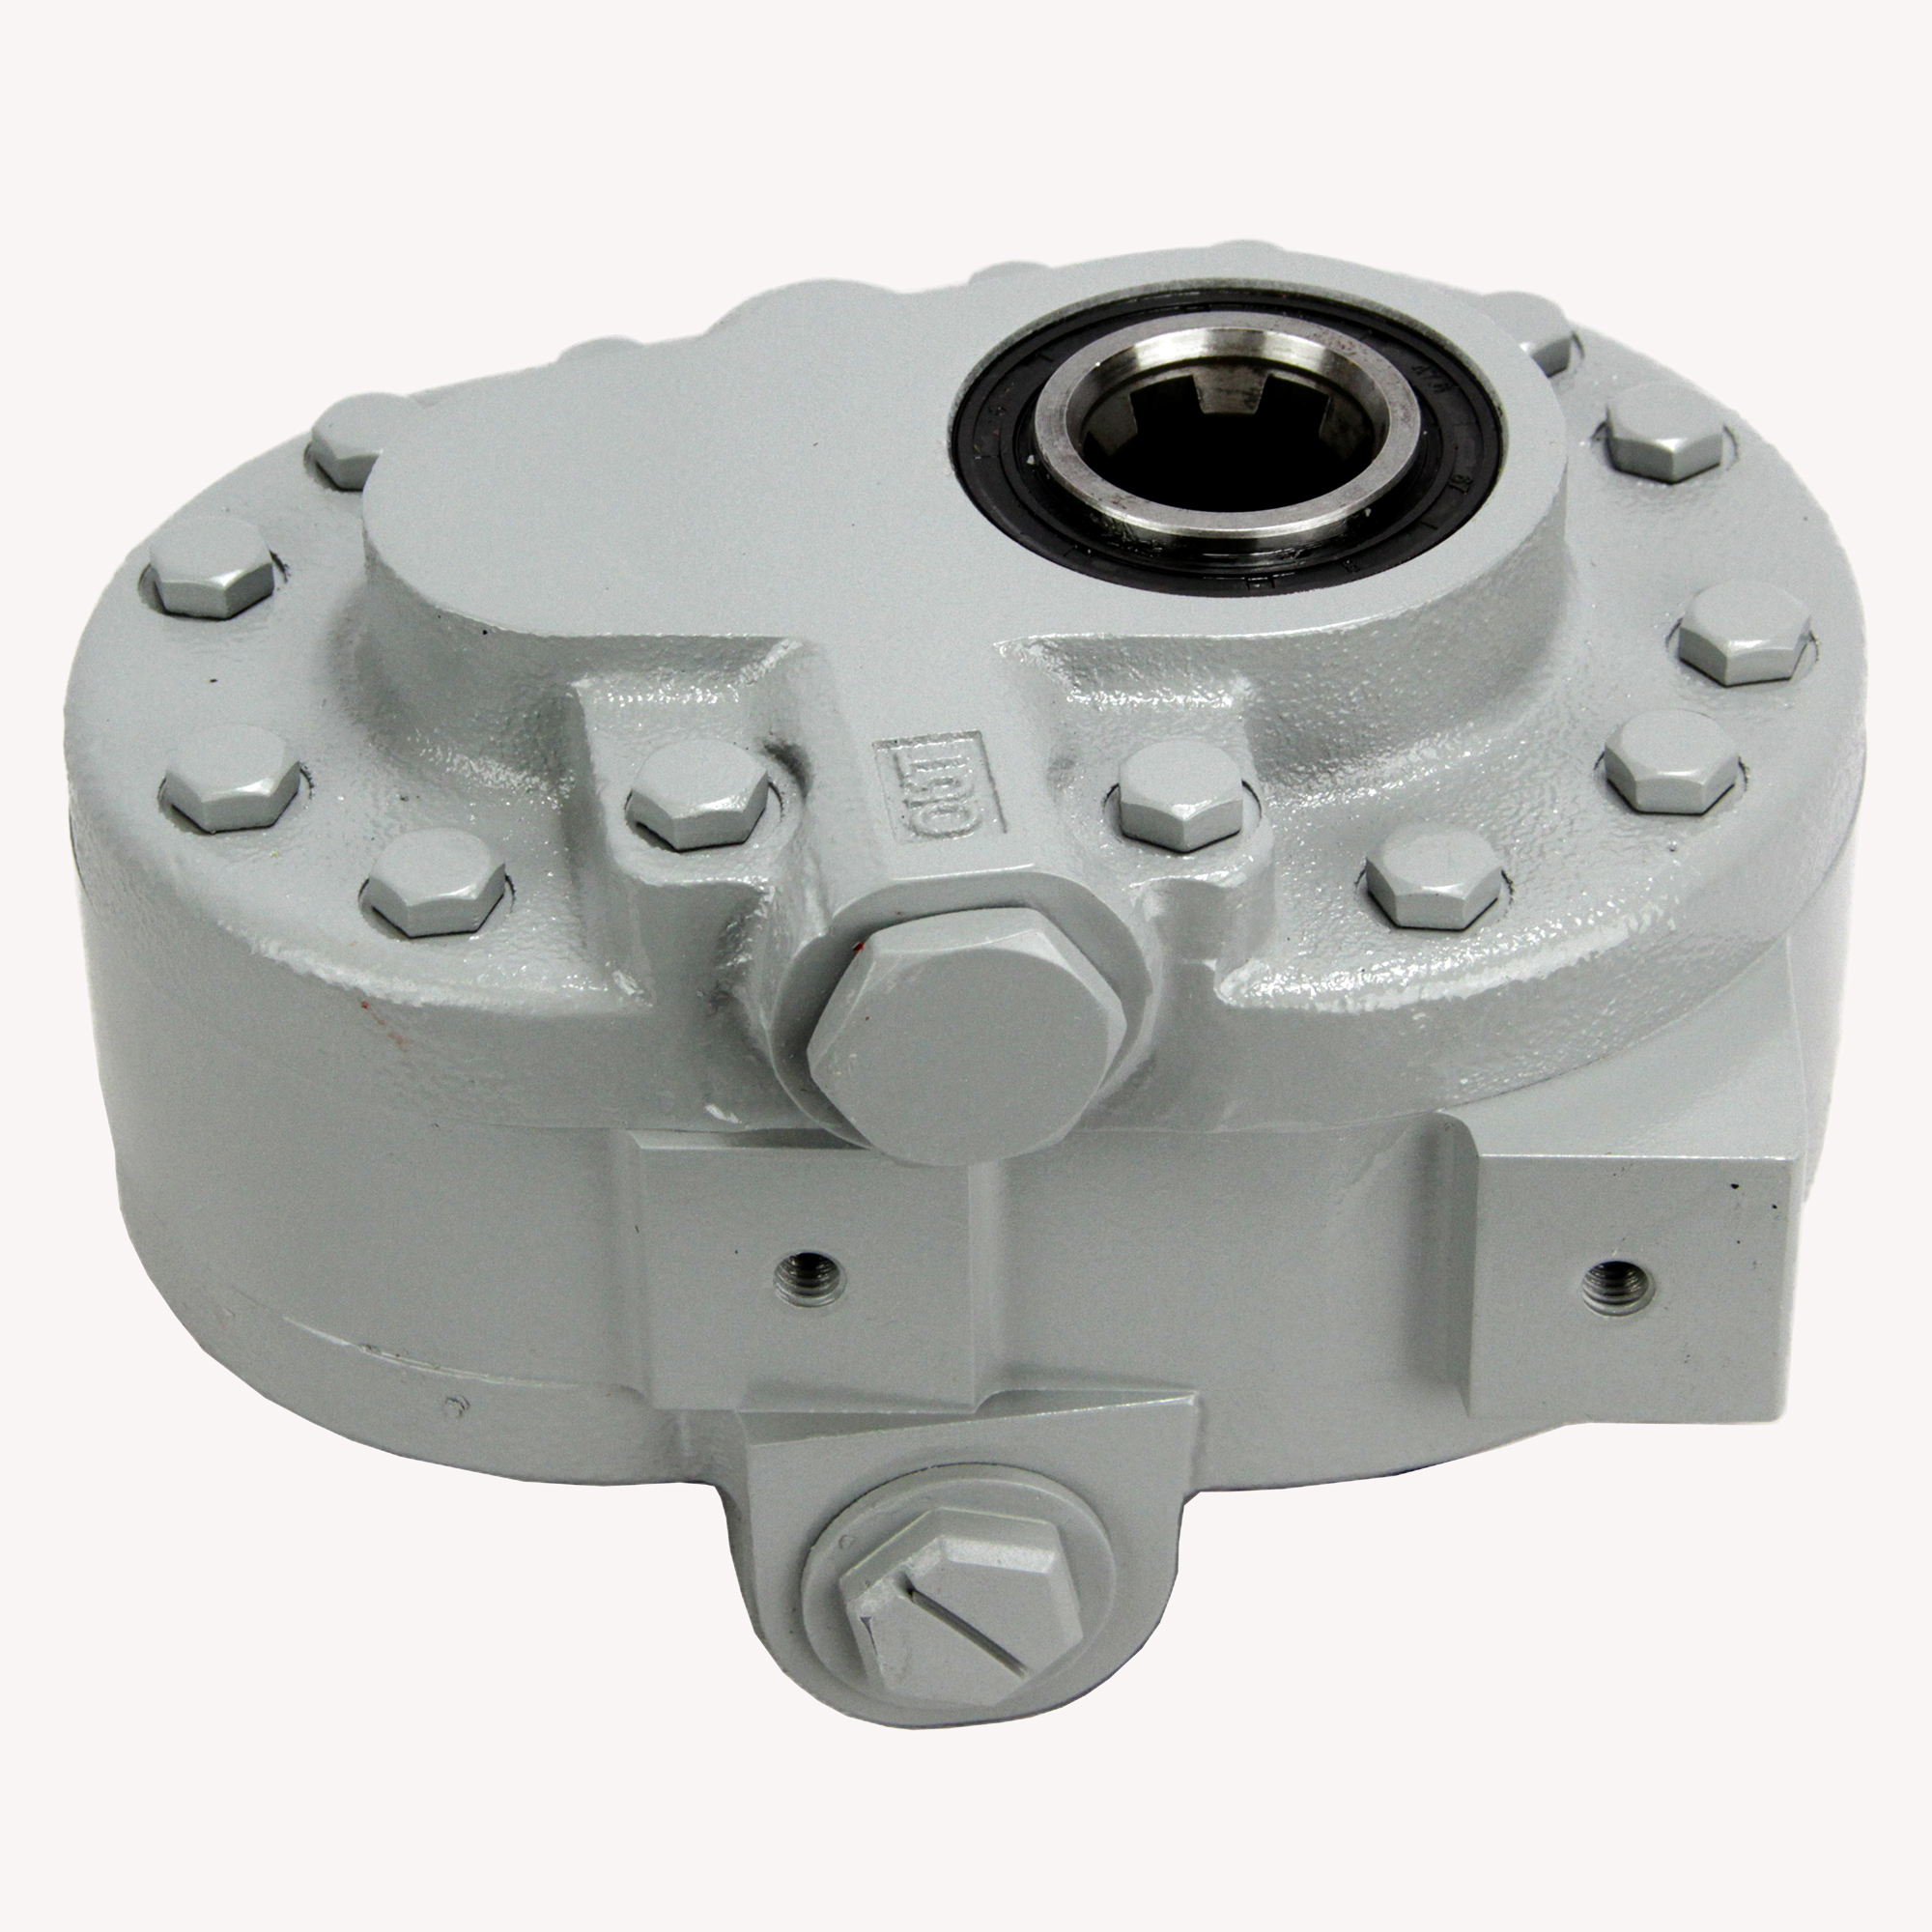 Bailey, PTO Hydraulic Gear Pump, Max. PSI 2500, Max. RPM 540, Max. Flow Rate 16.6 GPM, Model 252555